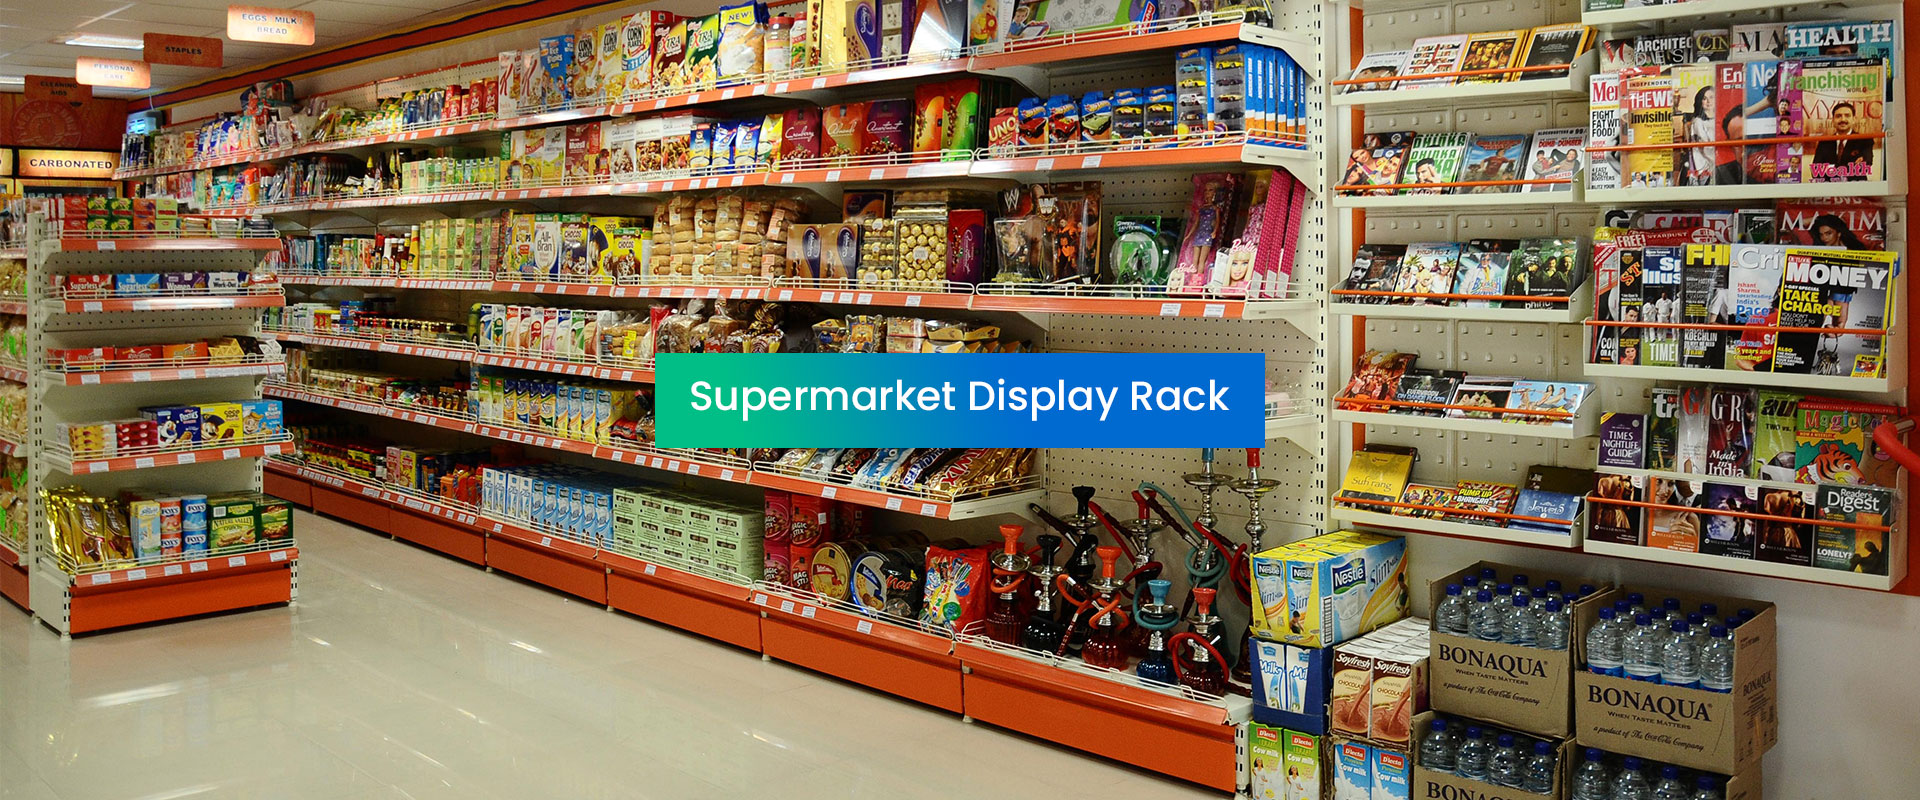 Supermarket Display Rack In Bettiah